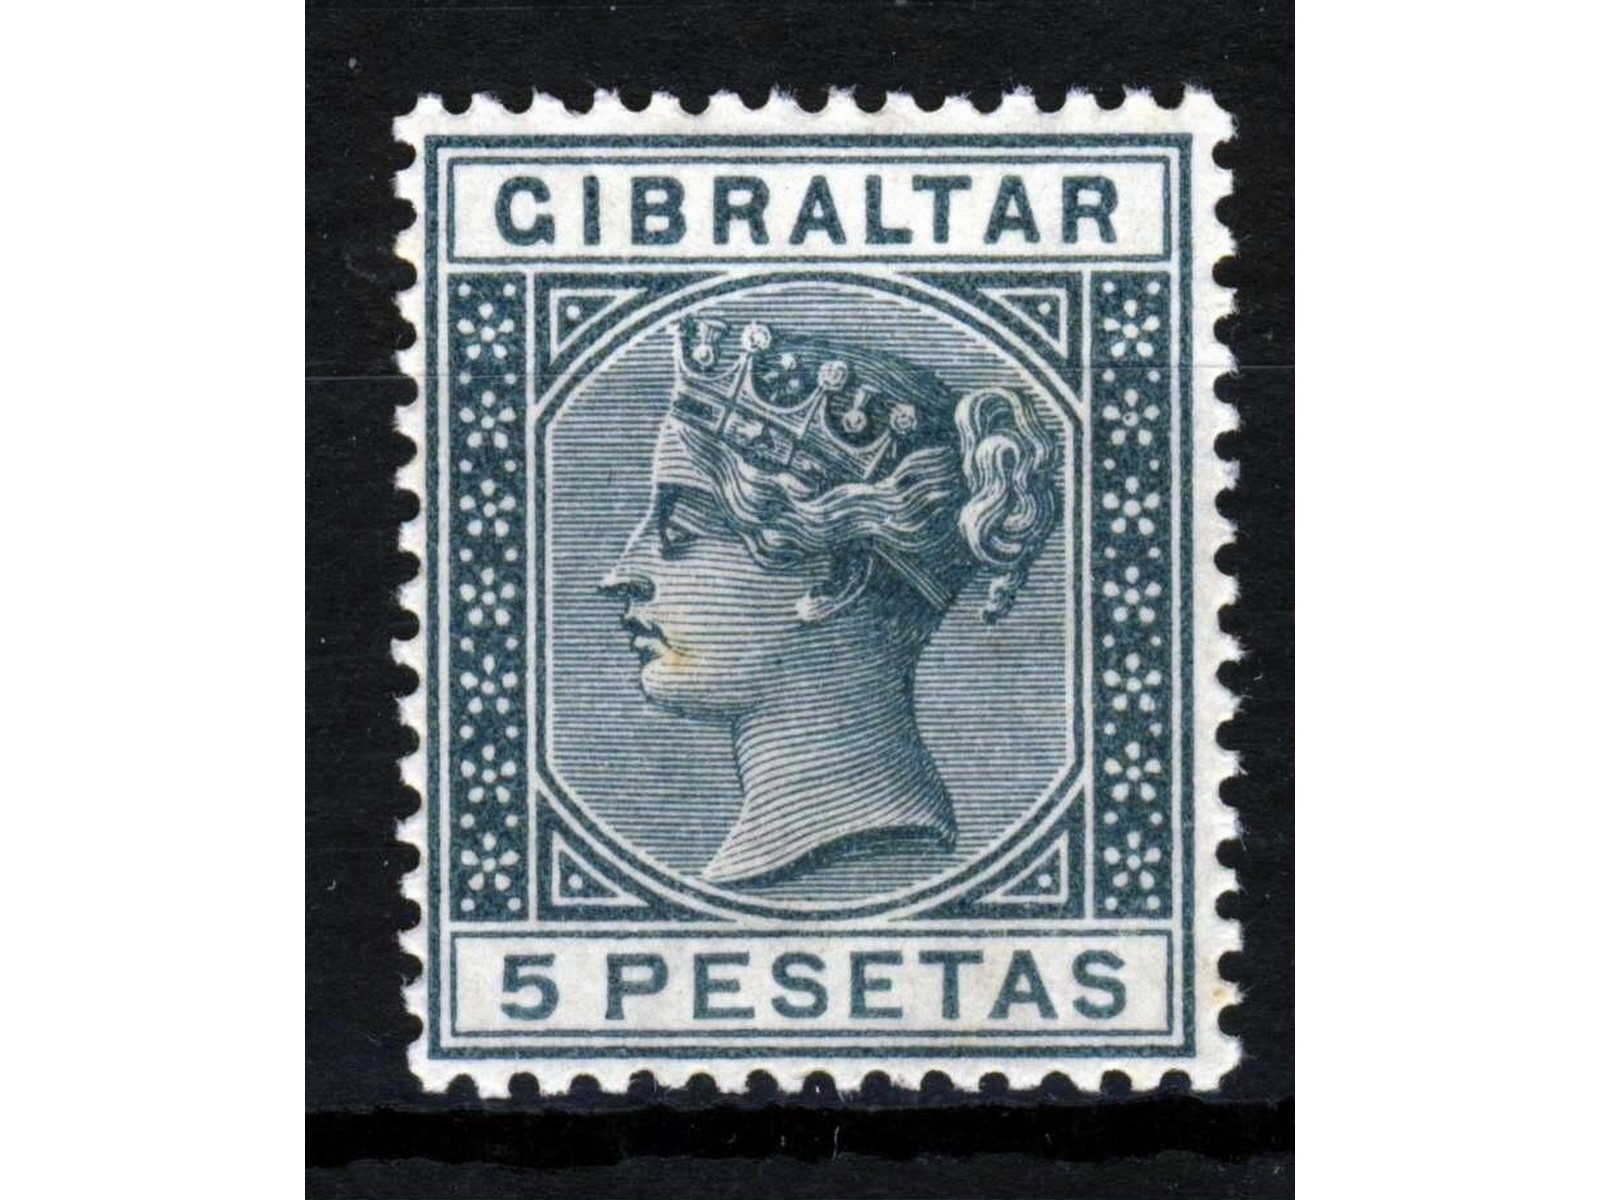 Sello Gibraltar 1889 Pesetas.jpg